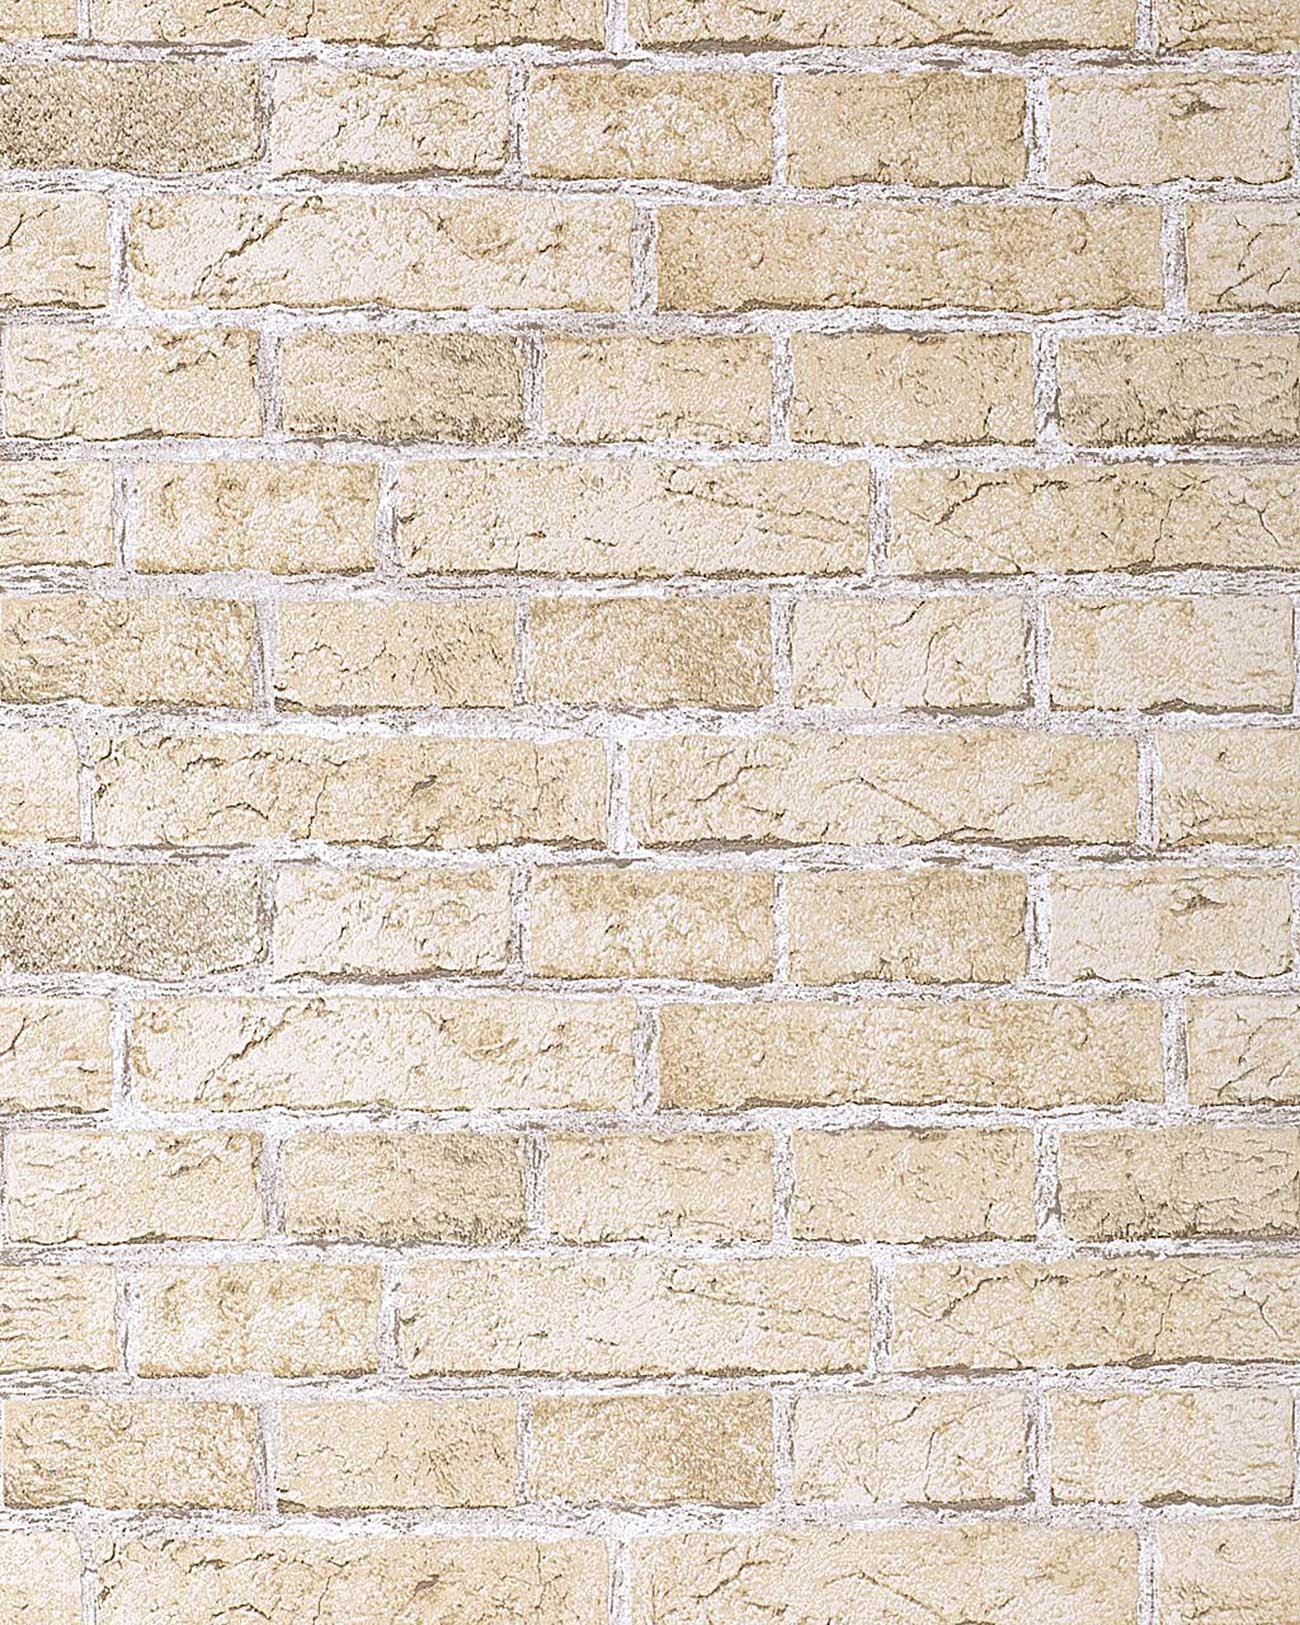 Rustic Design Brick Wallpaper Decor Vintage Stone Look Sand Beige